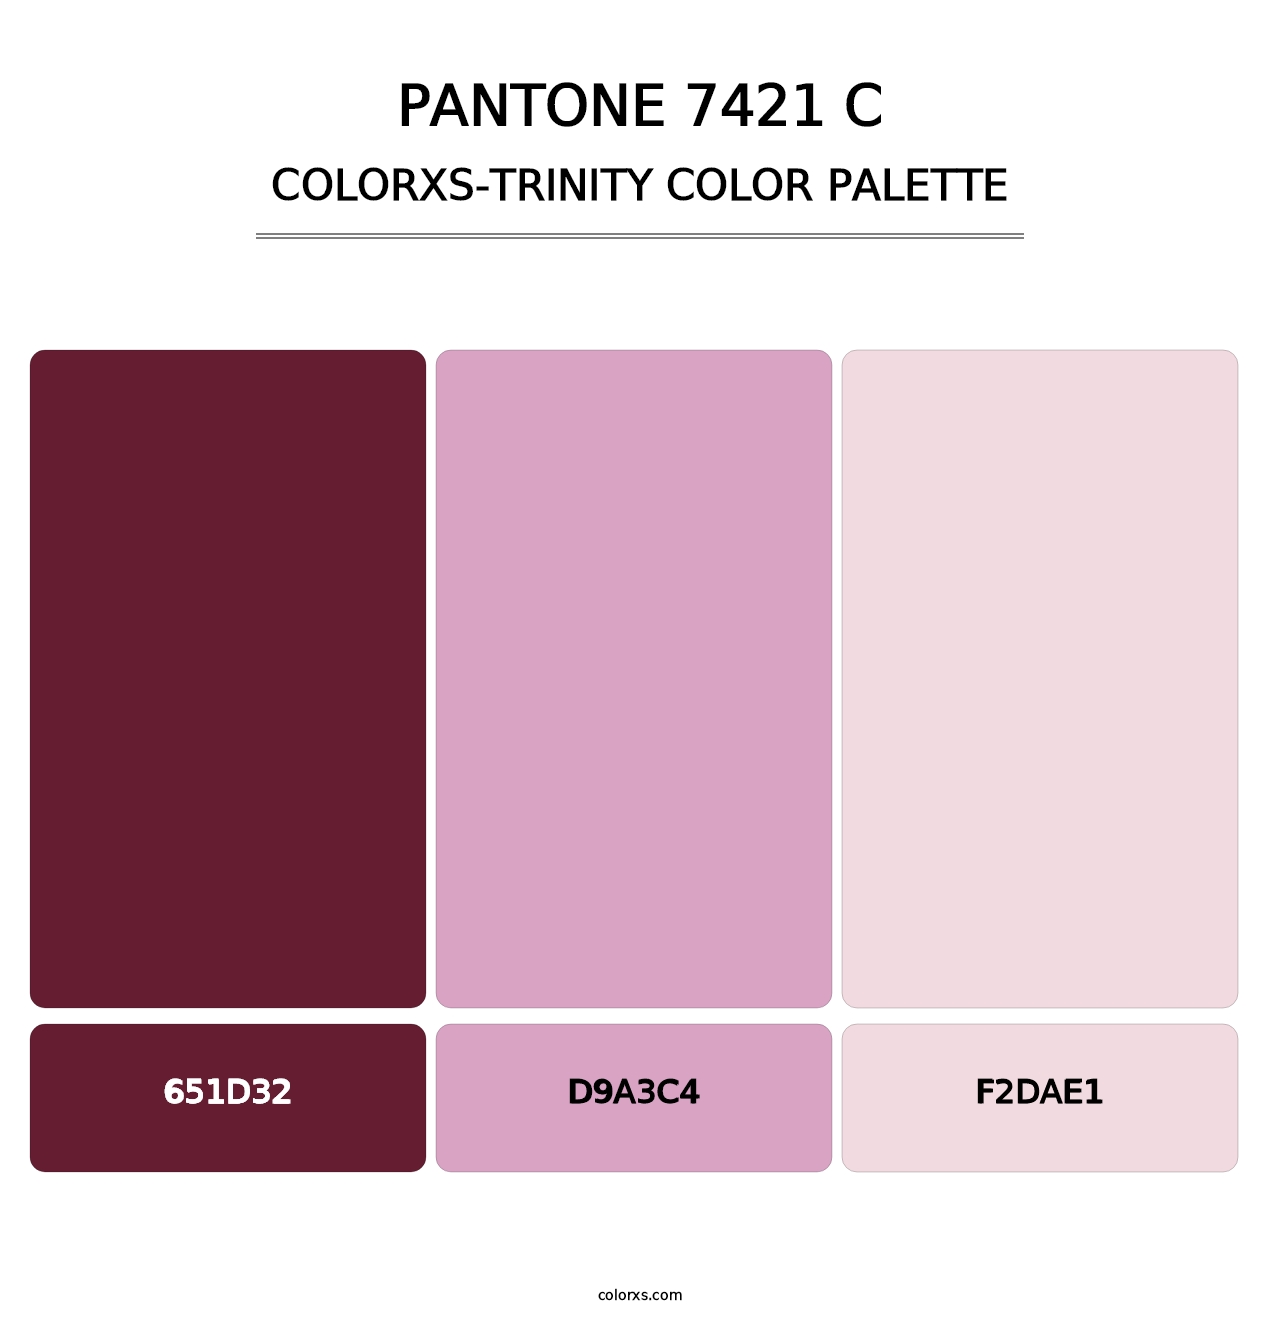 PANTONE 7421 C - Colorxs Trinity Palette